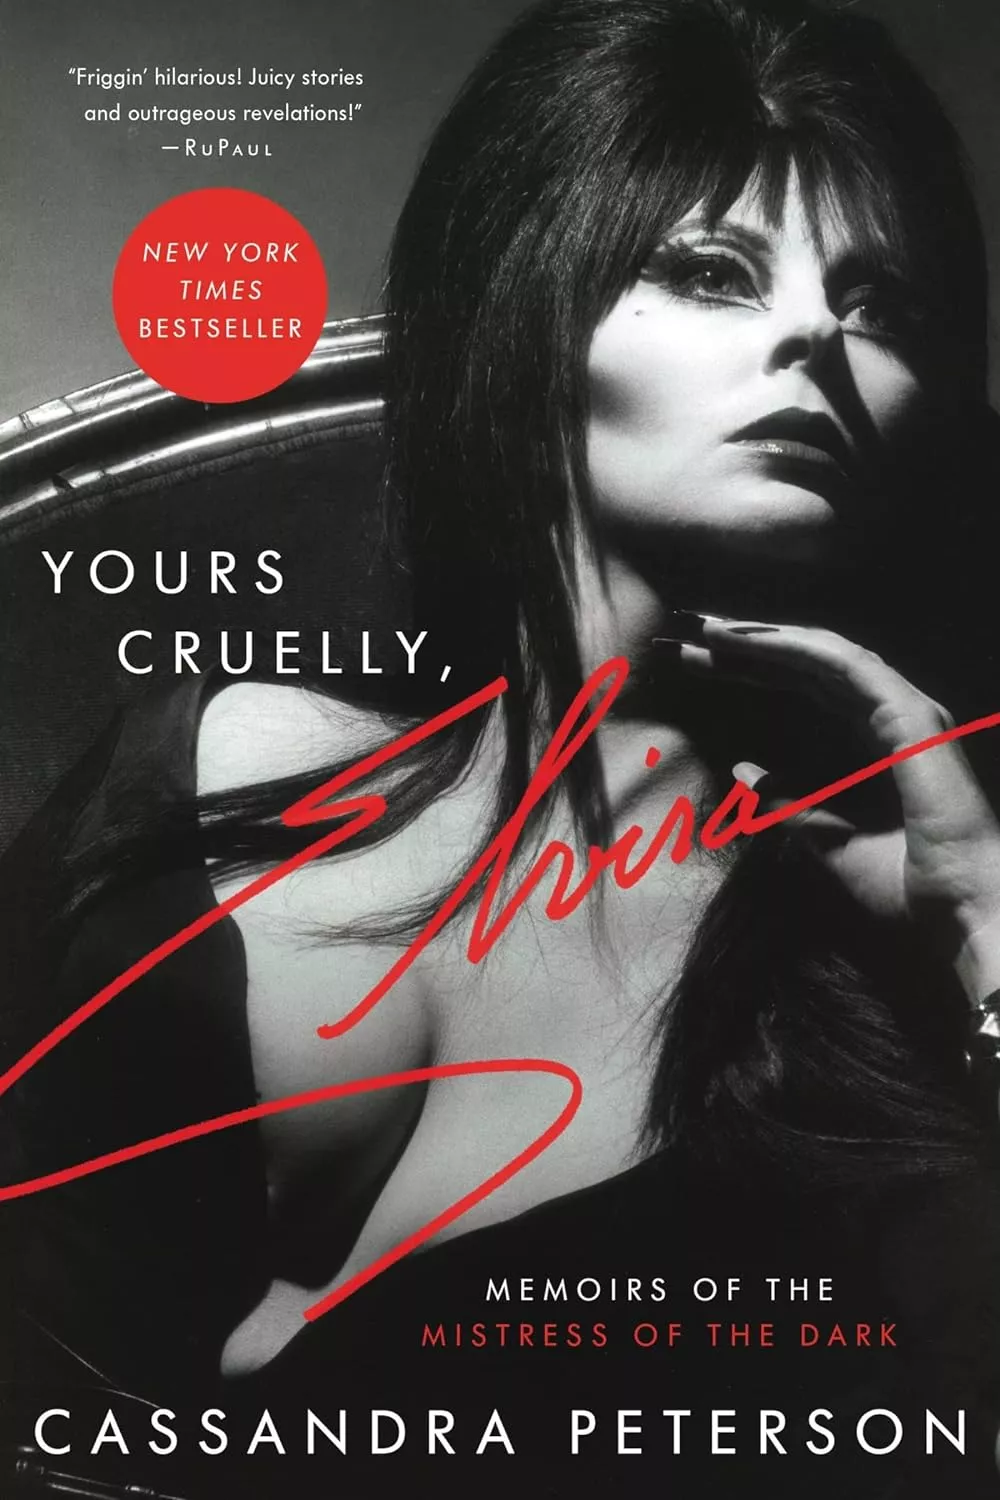 Yours cruelly, Elvira  memoirs of the mistress of the dark